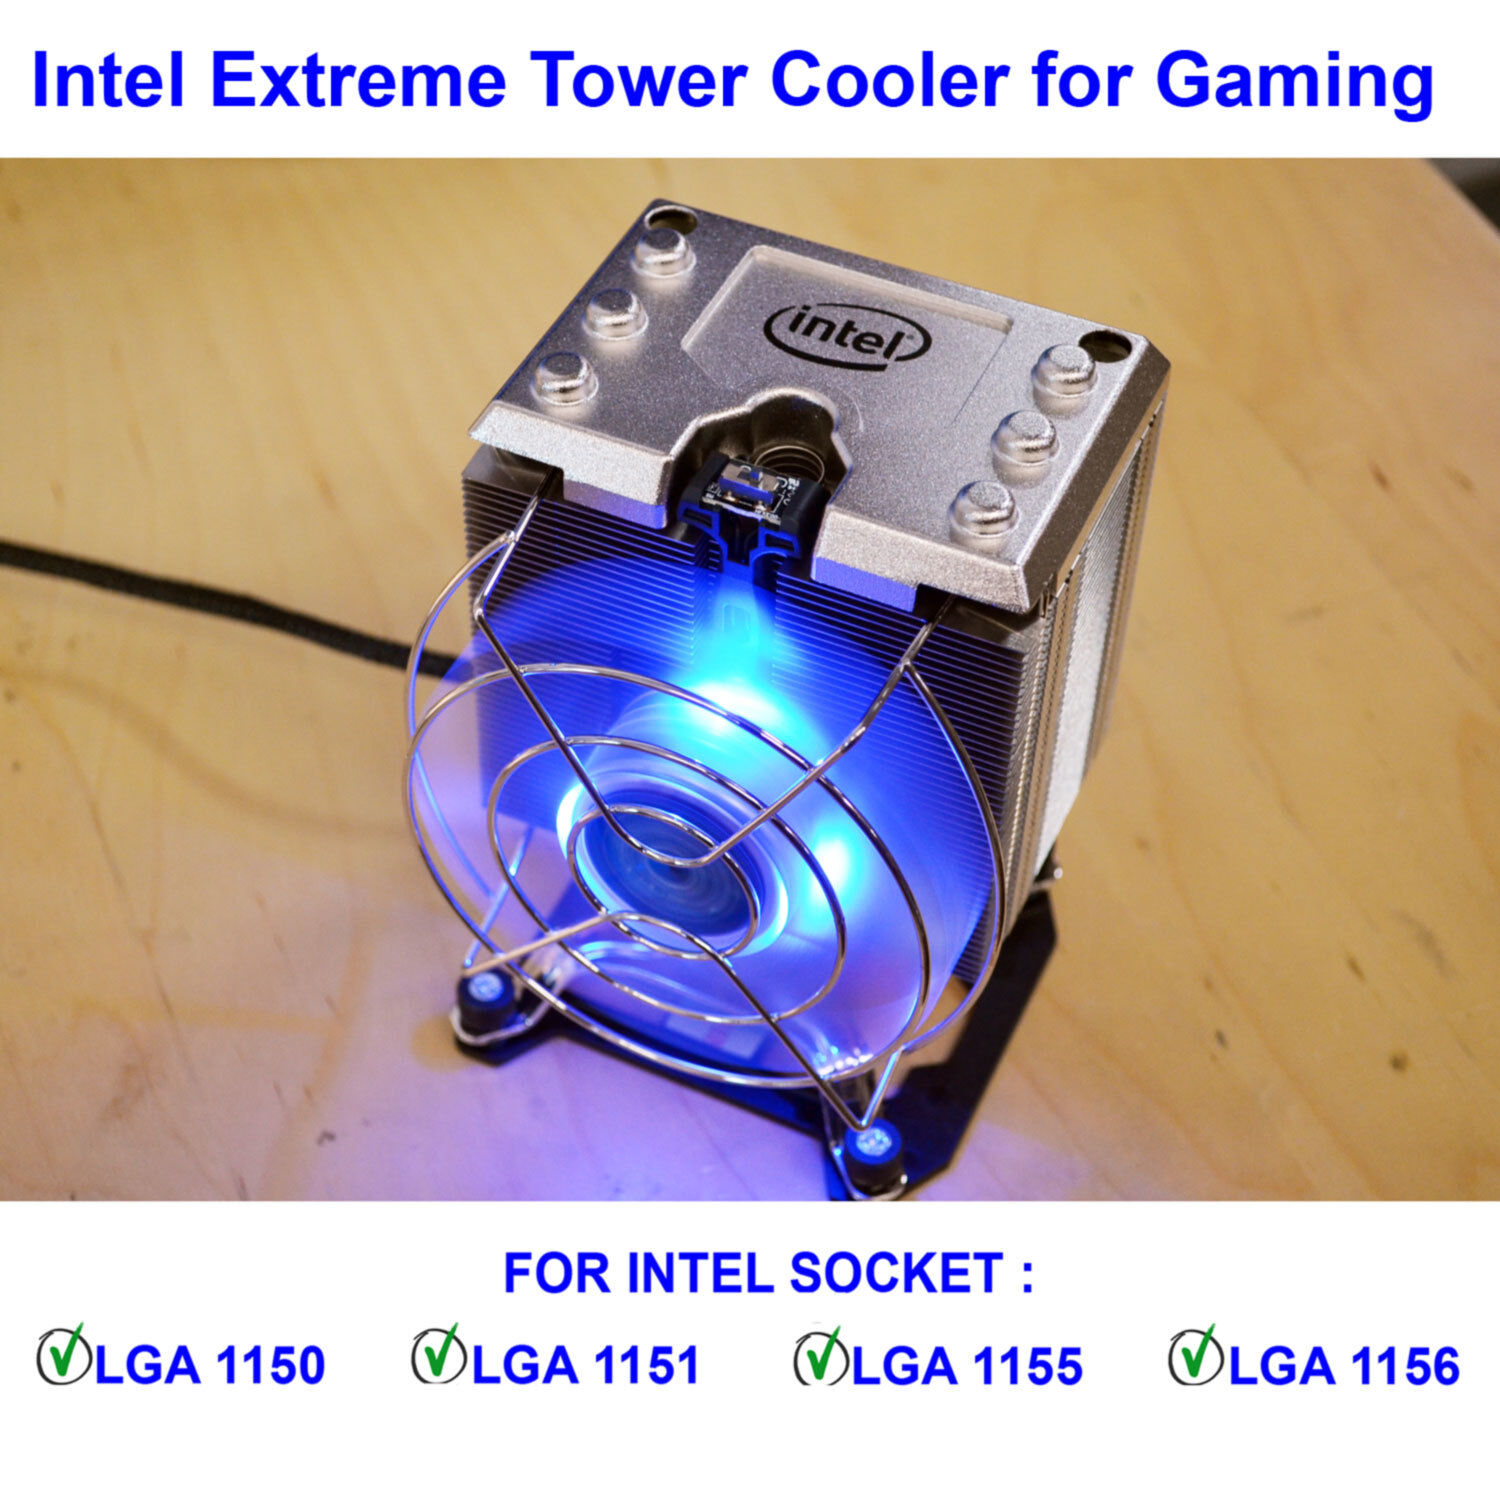 Intel XTS100H Extreme Tower Heatsink Gaming Cooler for LGA 1150,1151, 1155, 1156